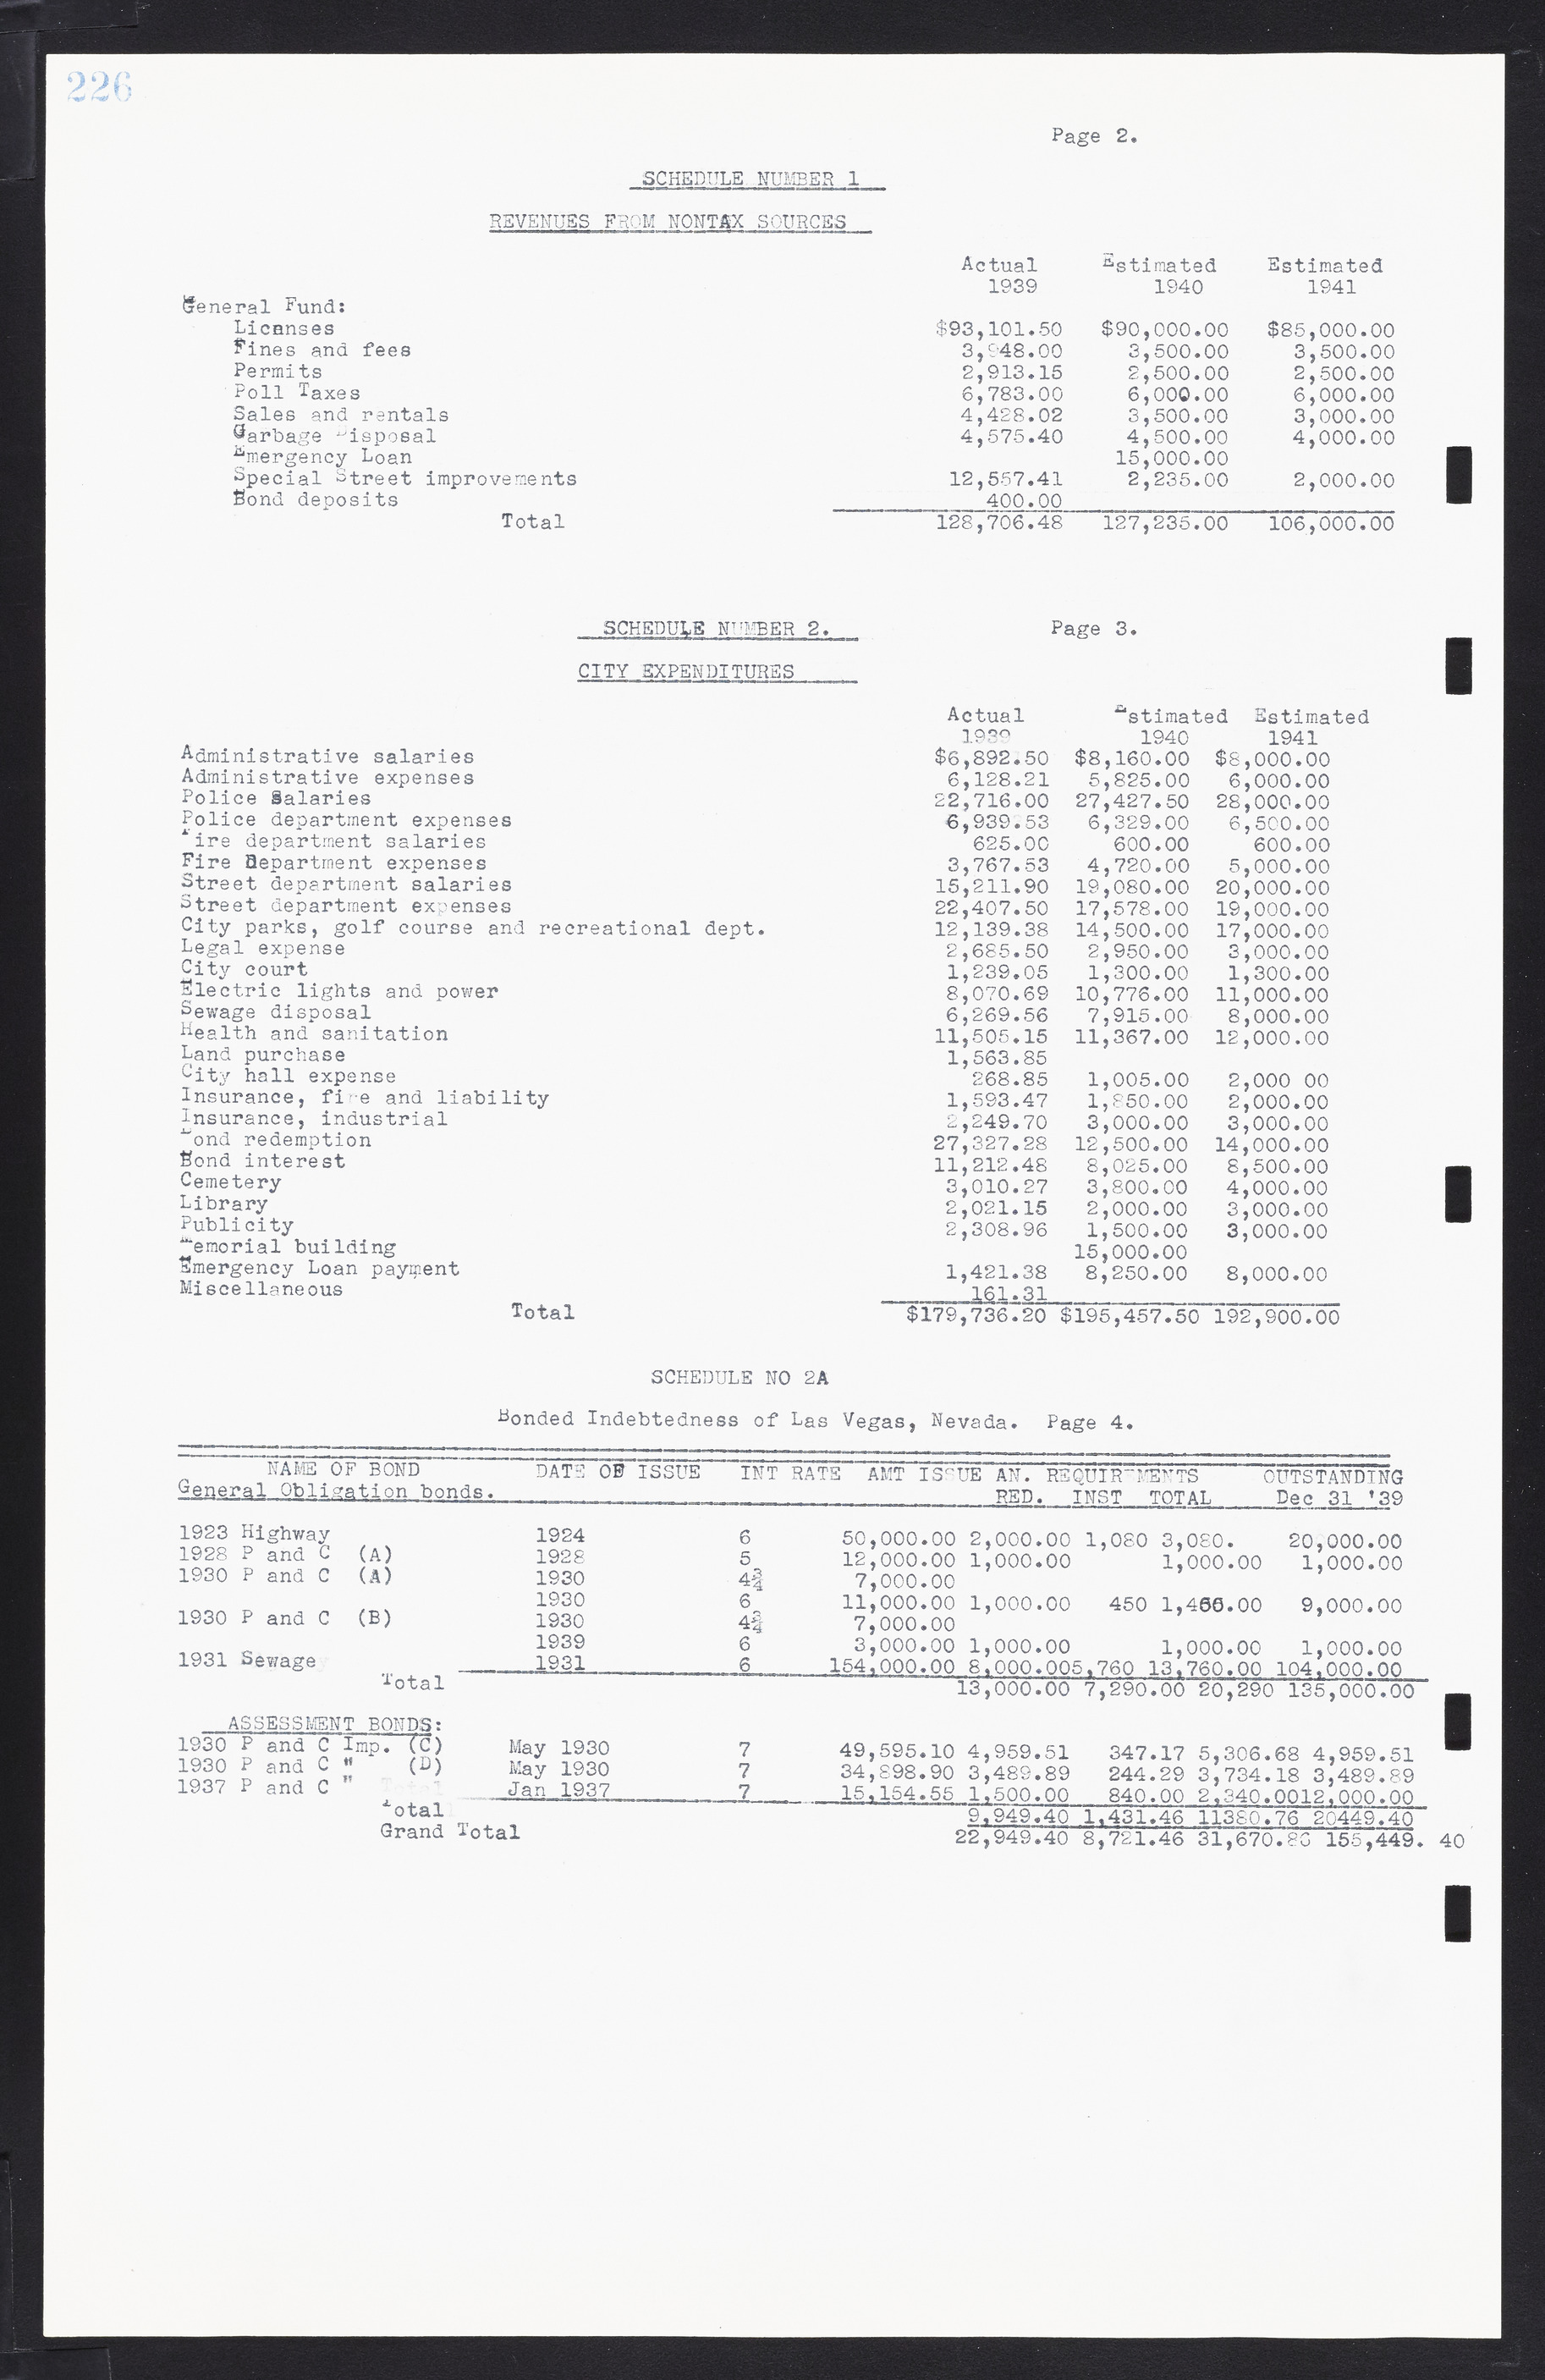 Las Vegas City Commission Minutes, February 17, 1937 to August 4, 1942, lvc000004-246